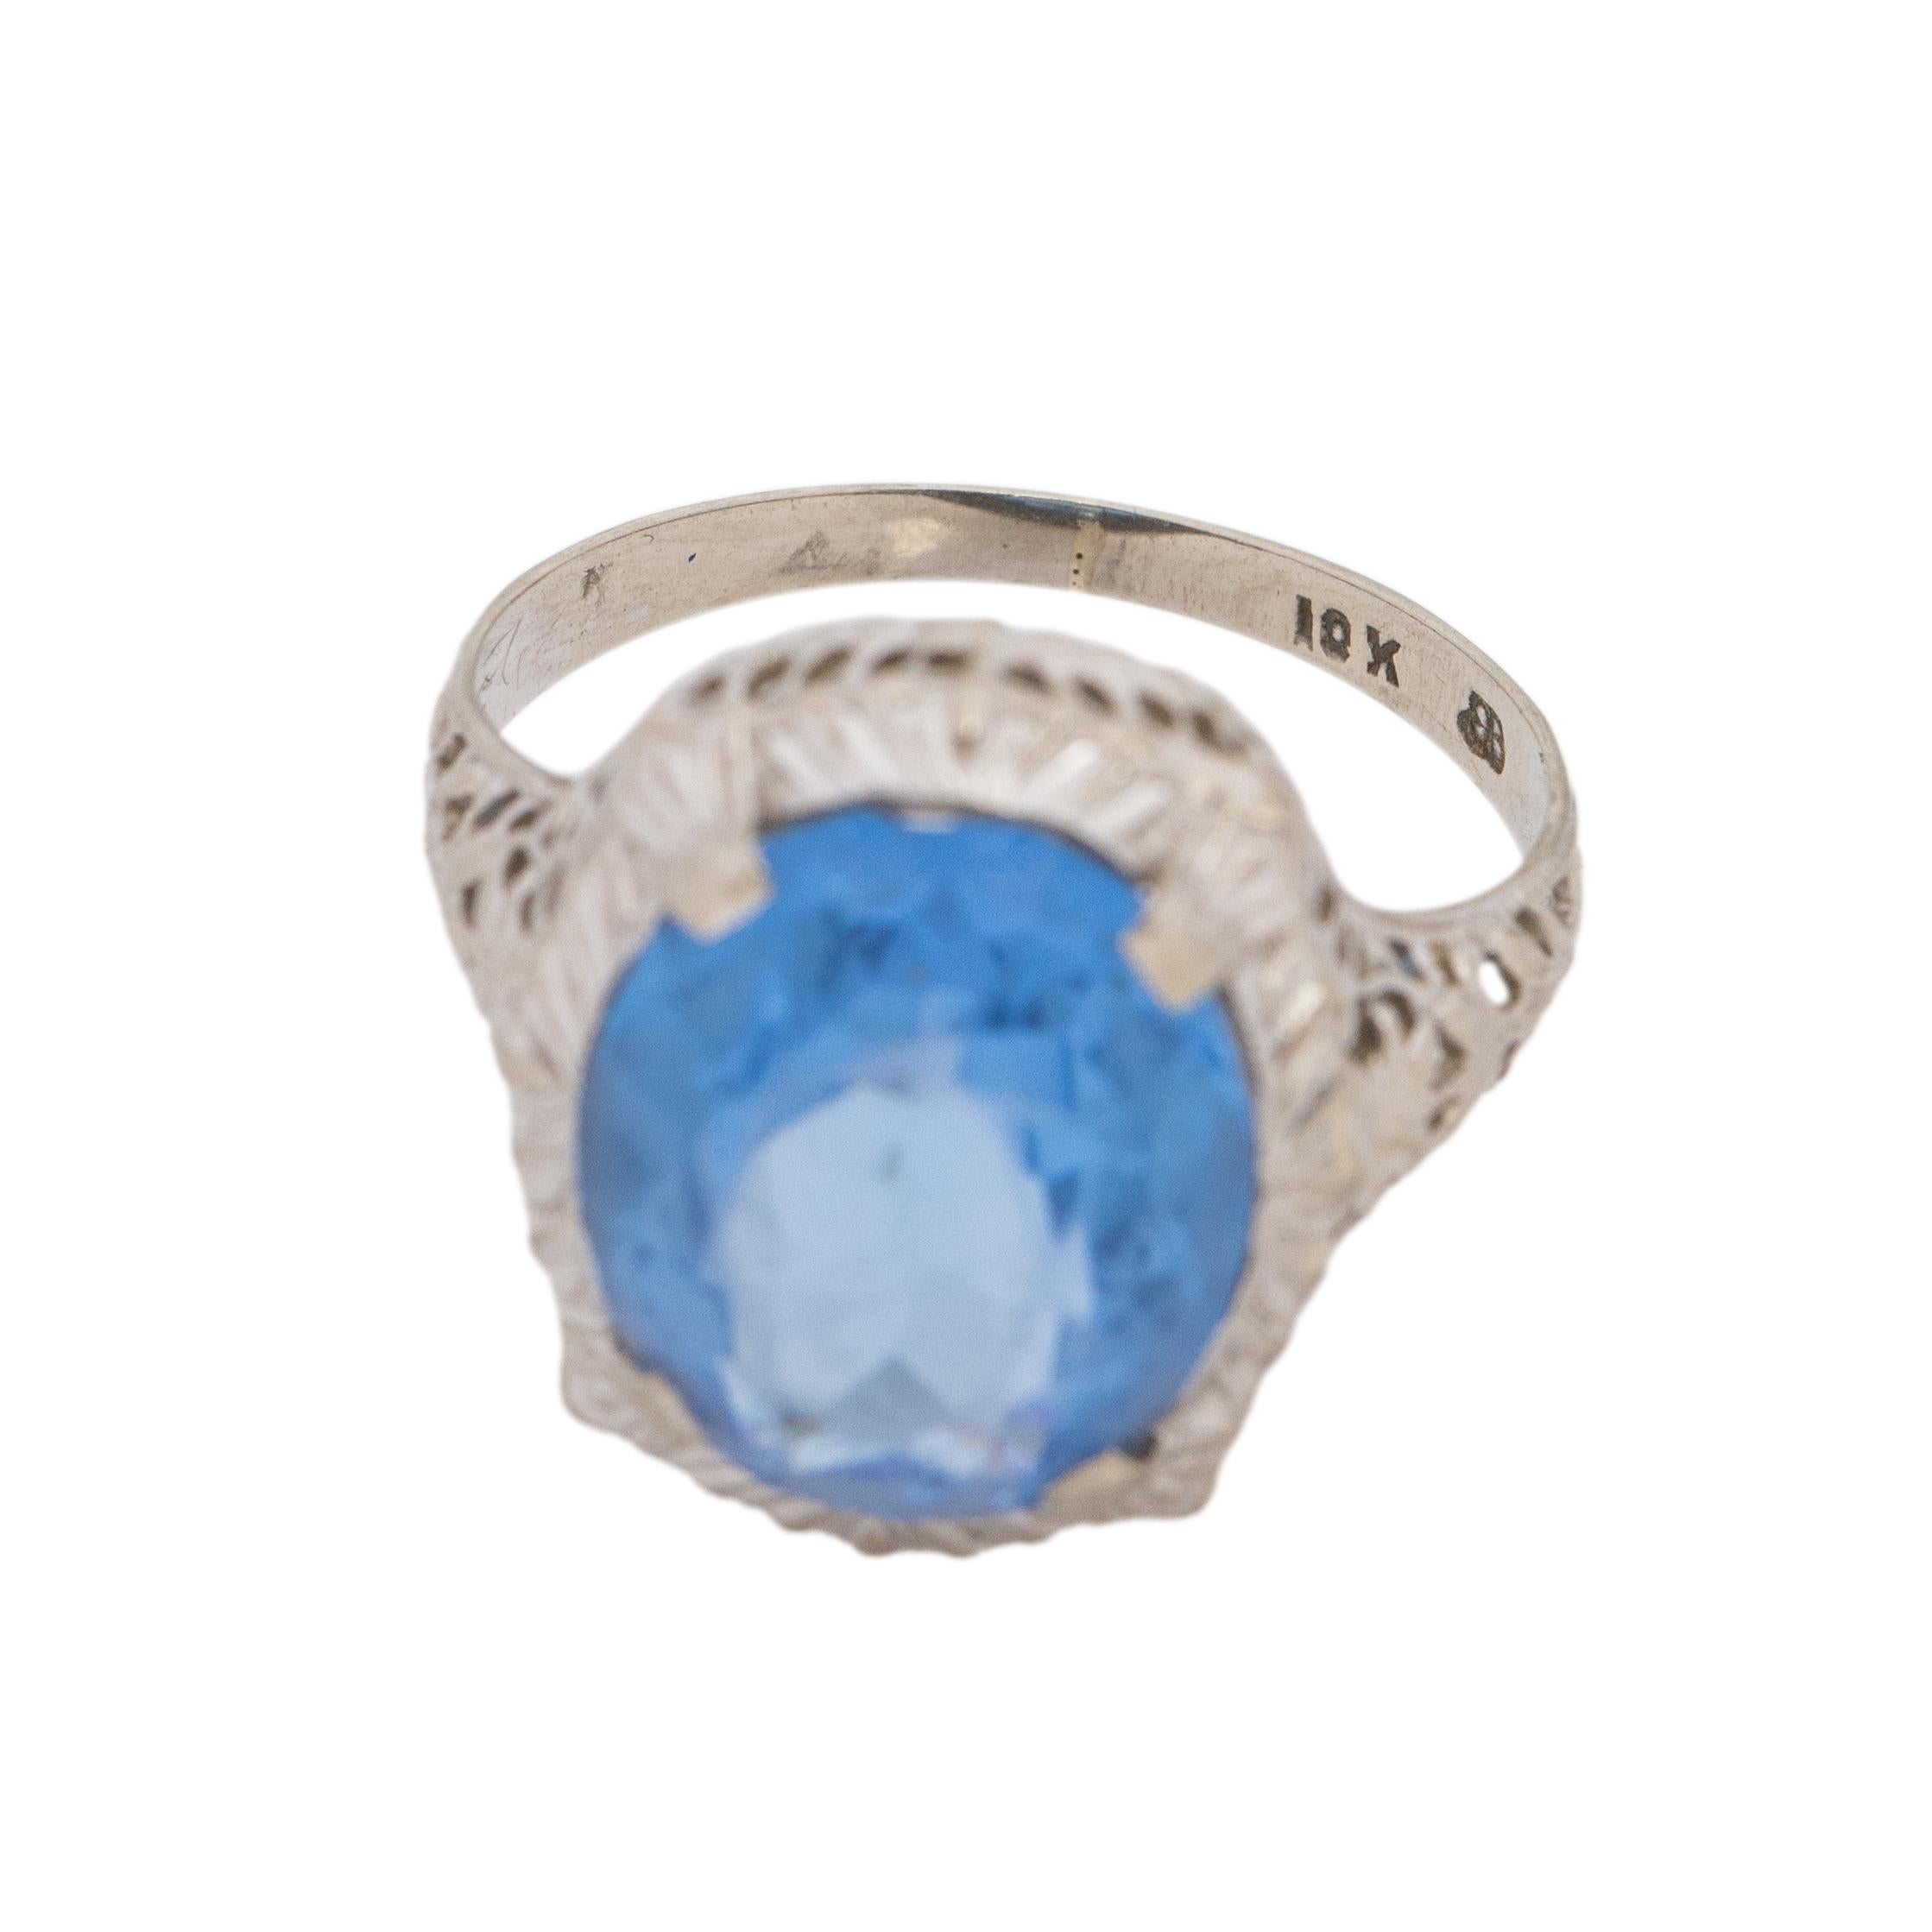 Circa 1920's 10K White Gold Vintage Filigree Blue Gem Fashion Ring 4